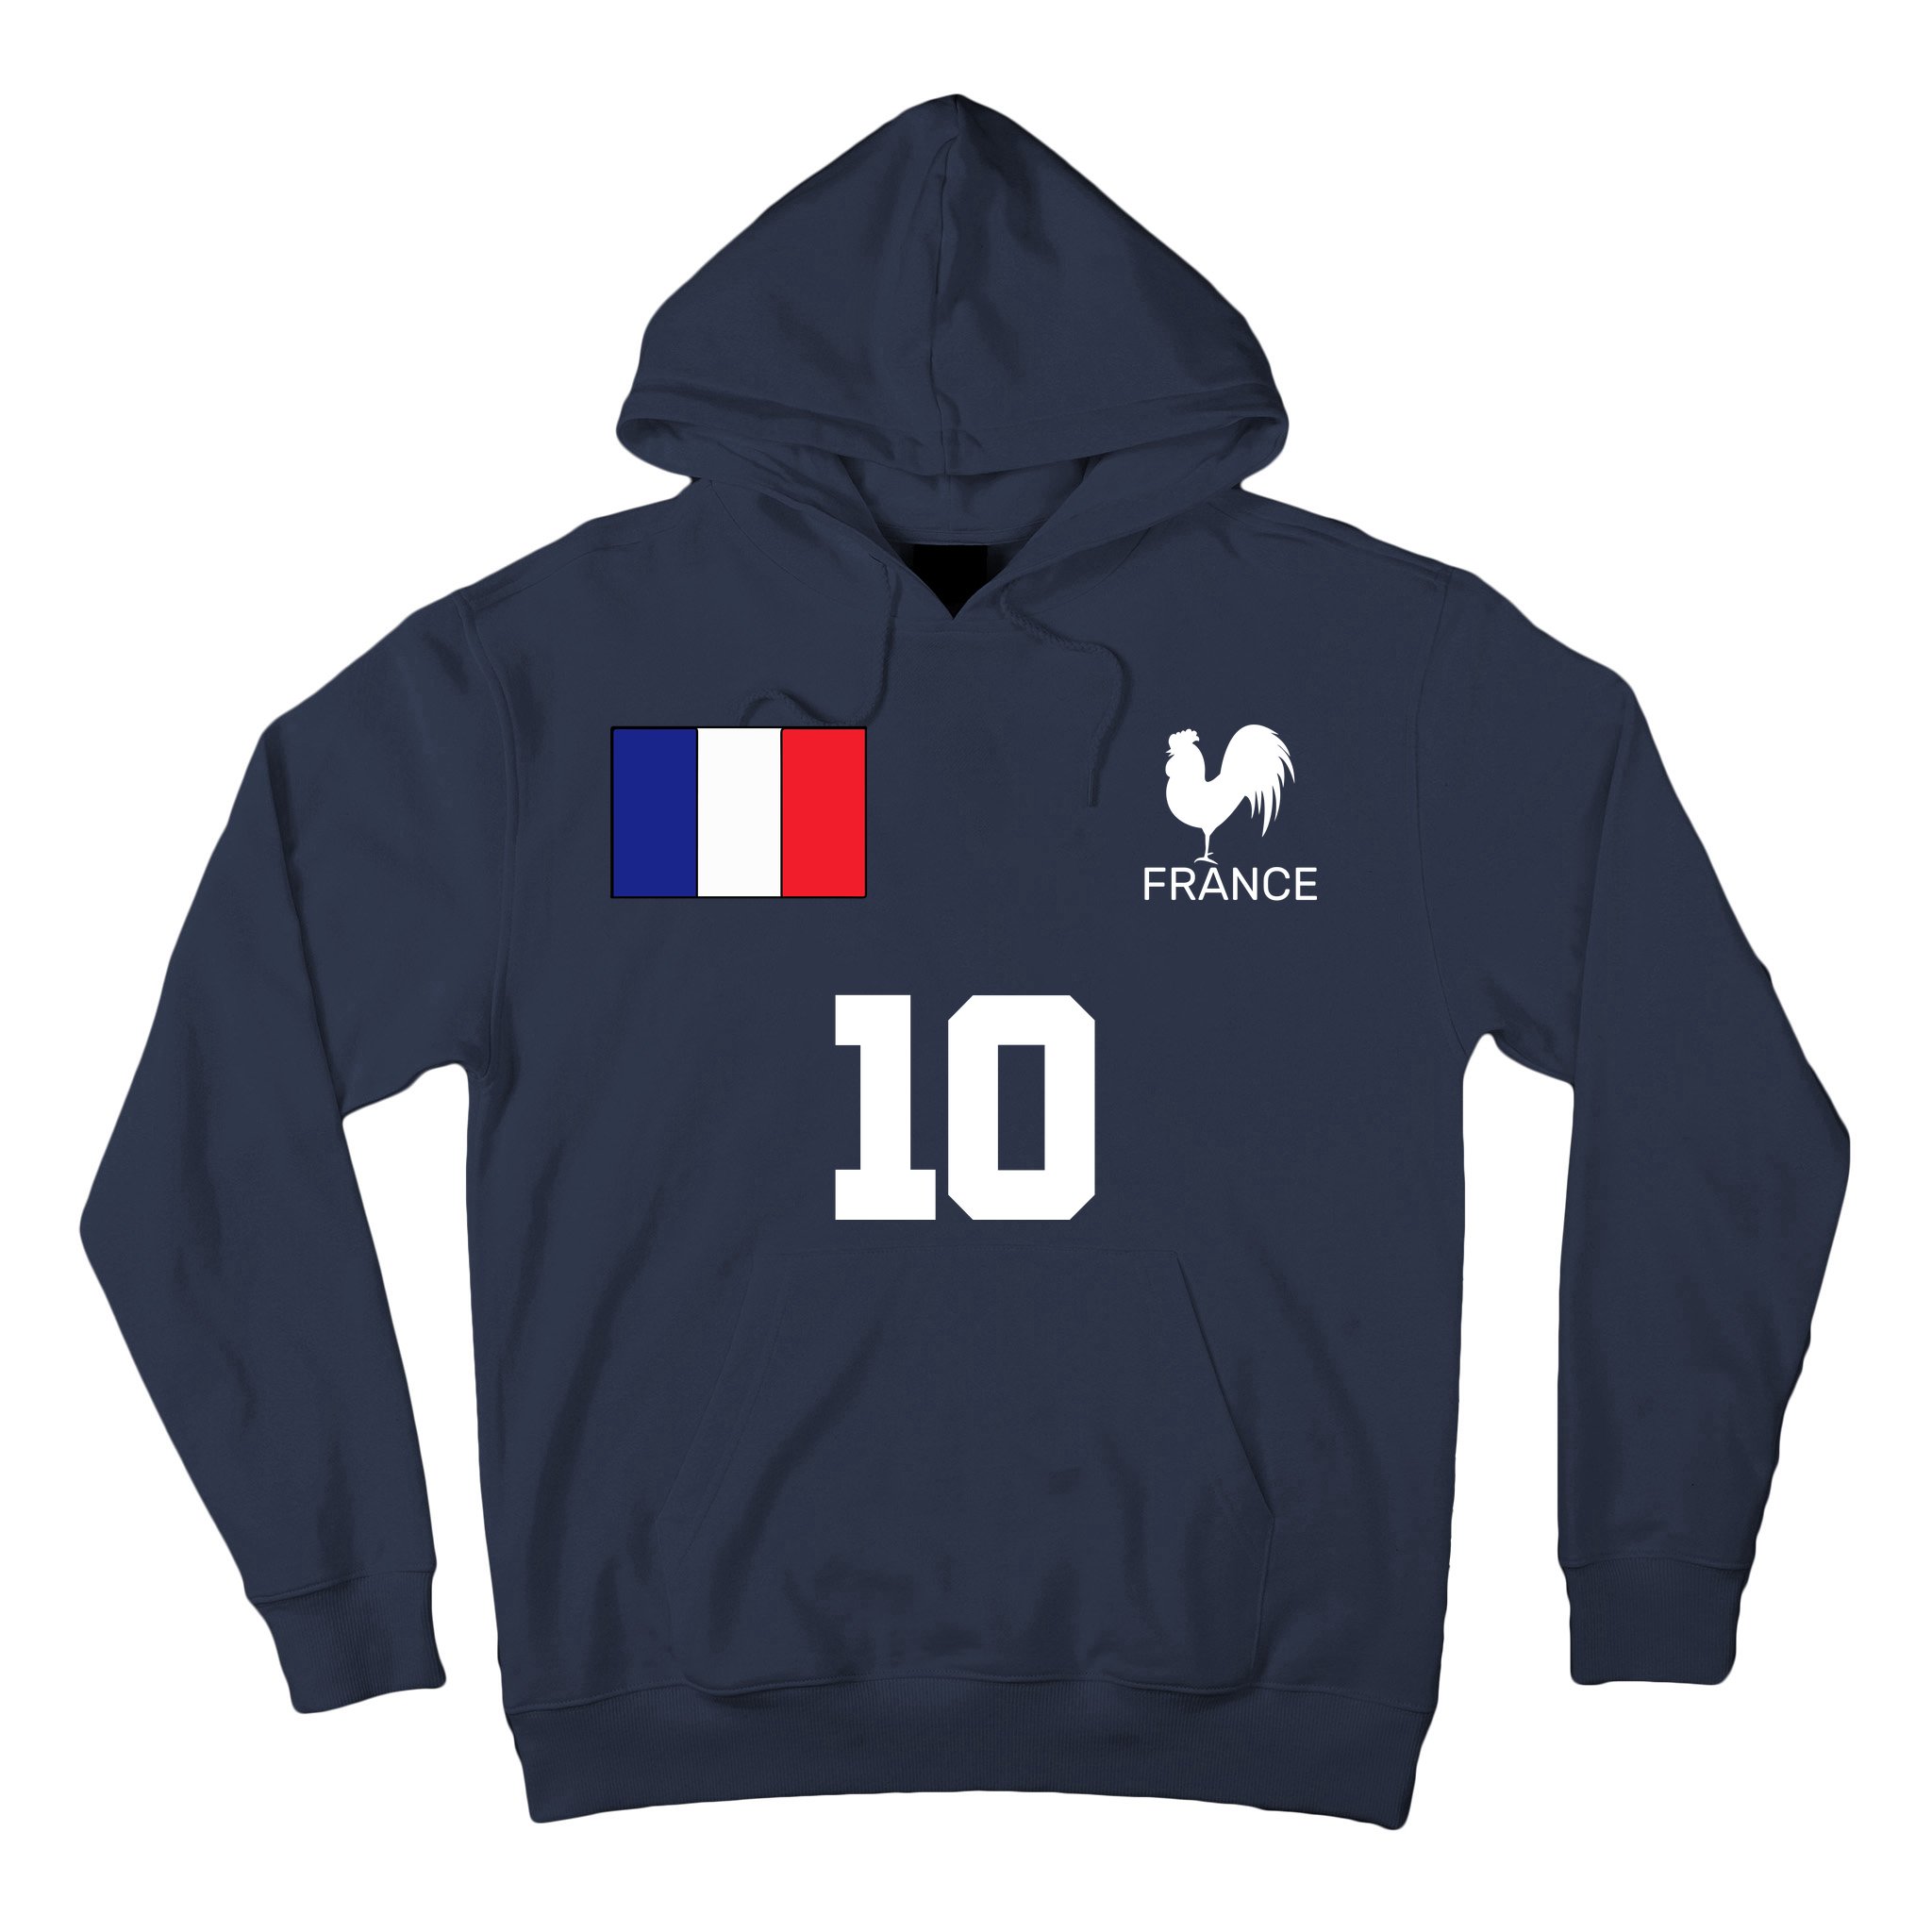 Teeshirtpalace France Soccer Jersey Hoodie